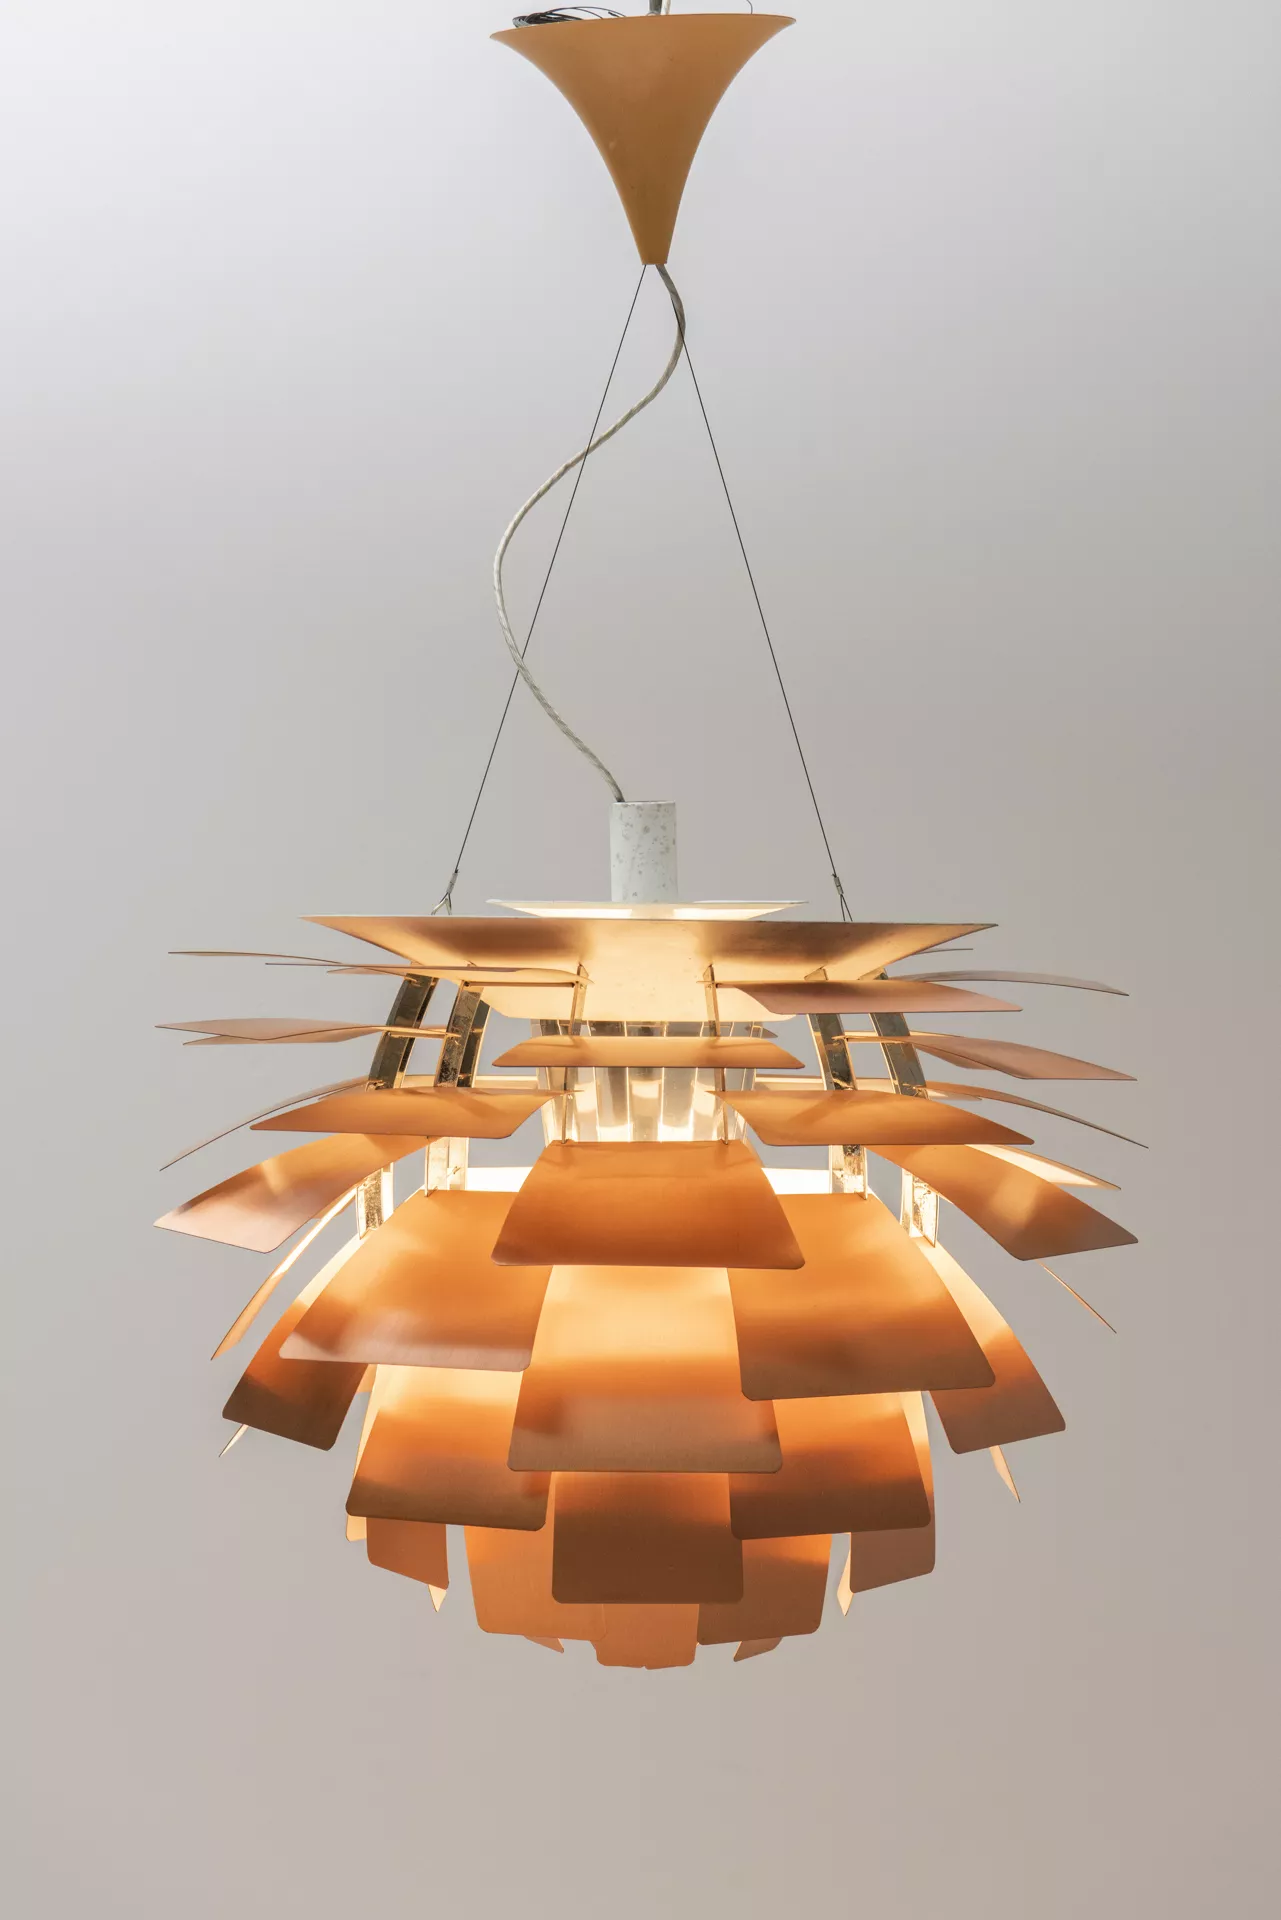 Poul Henningsen, PH Artichoke model suspension lamp